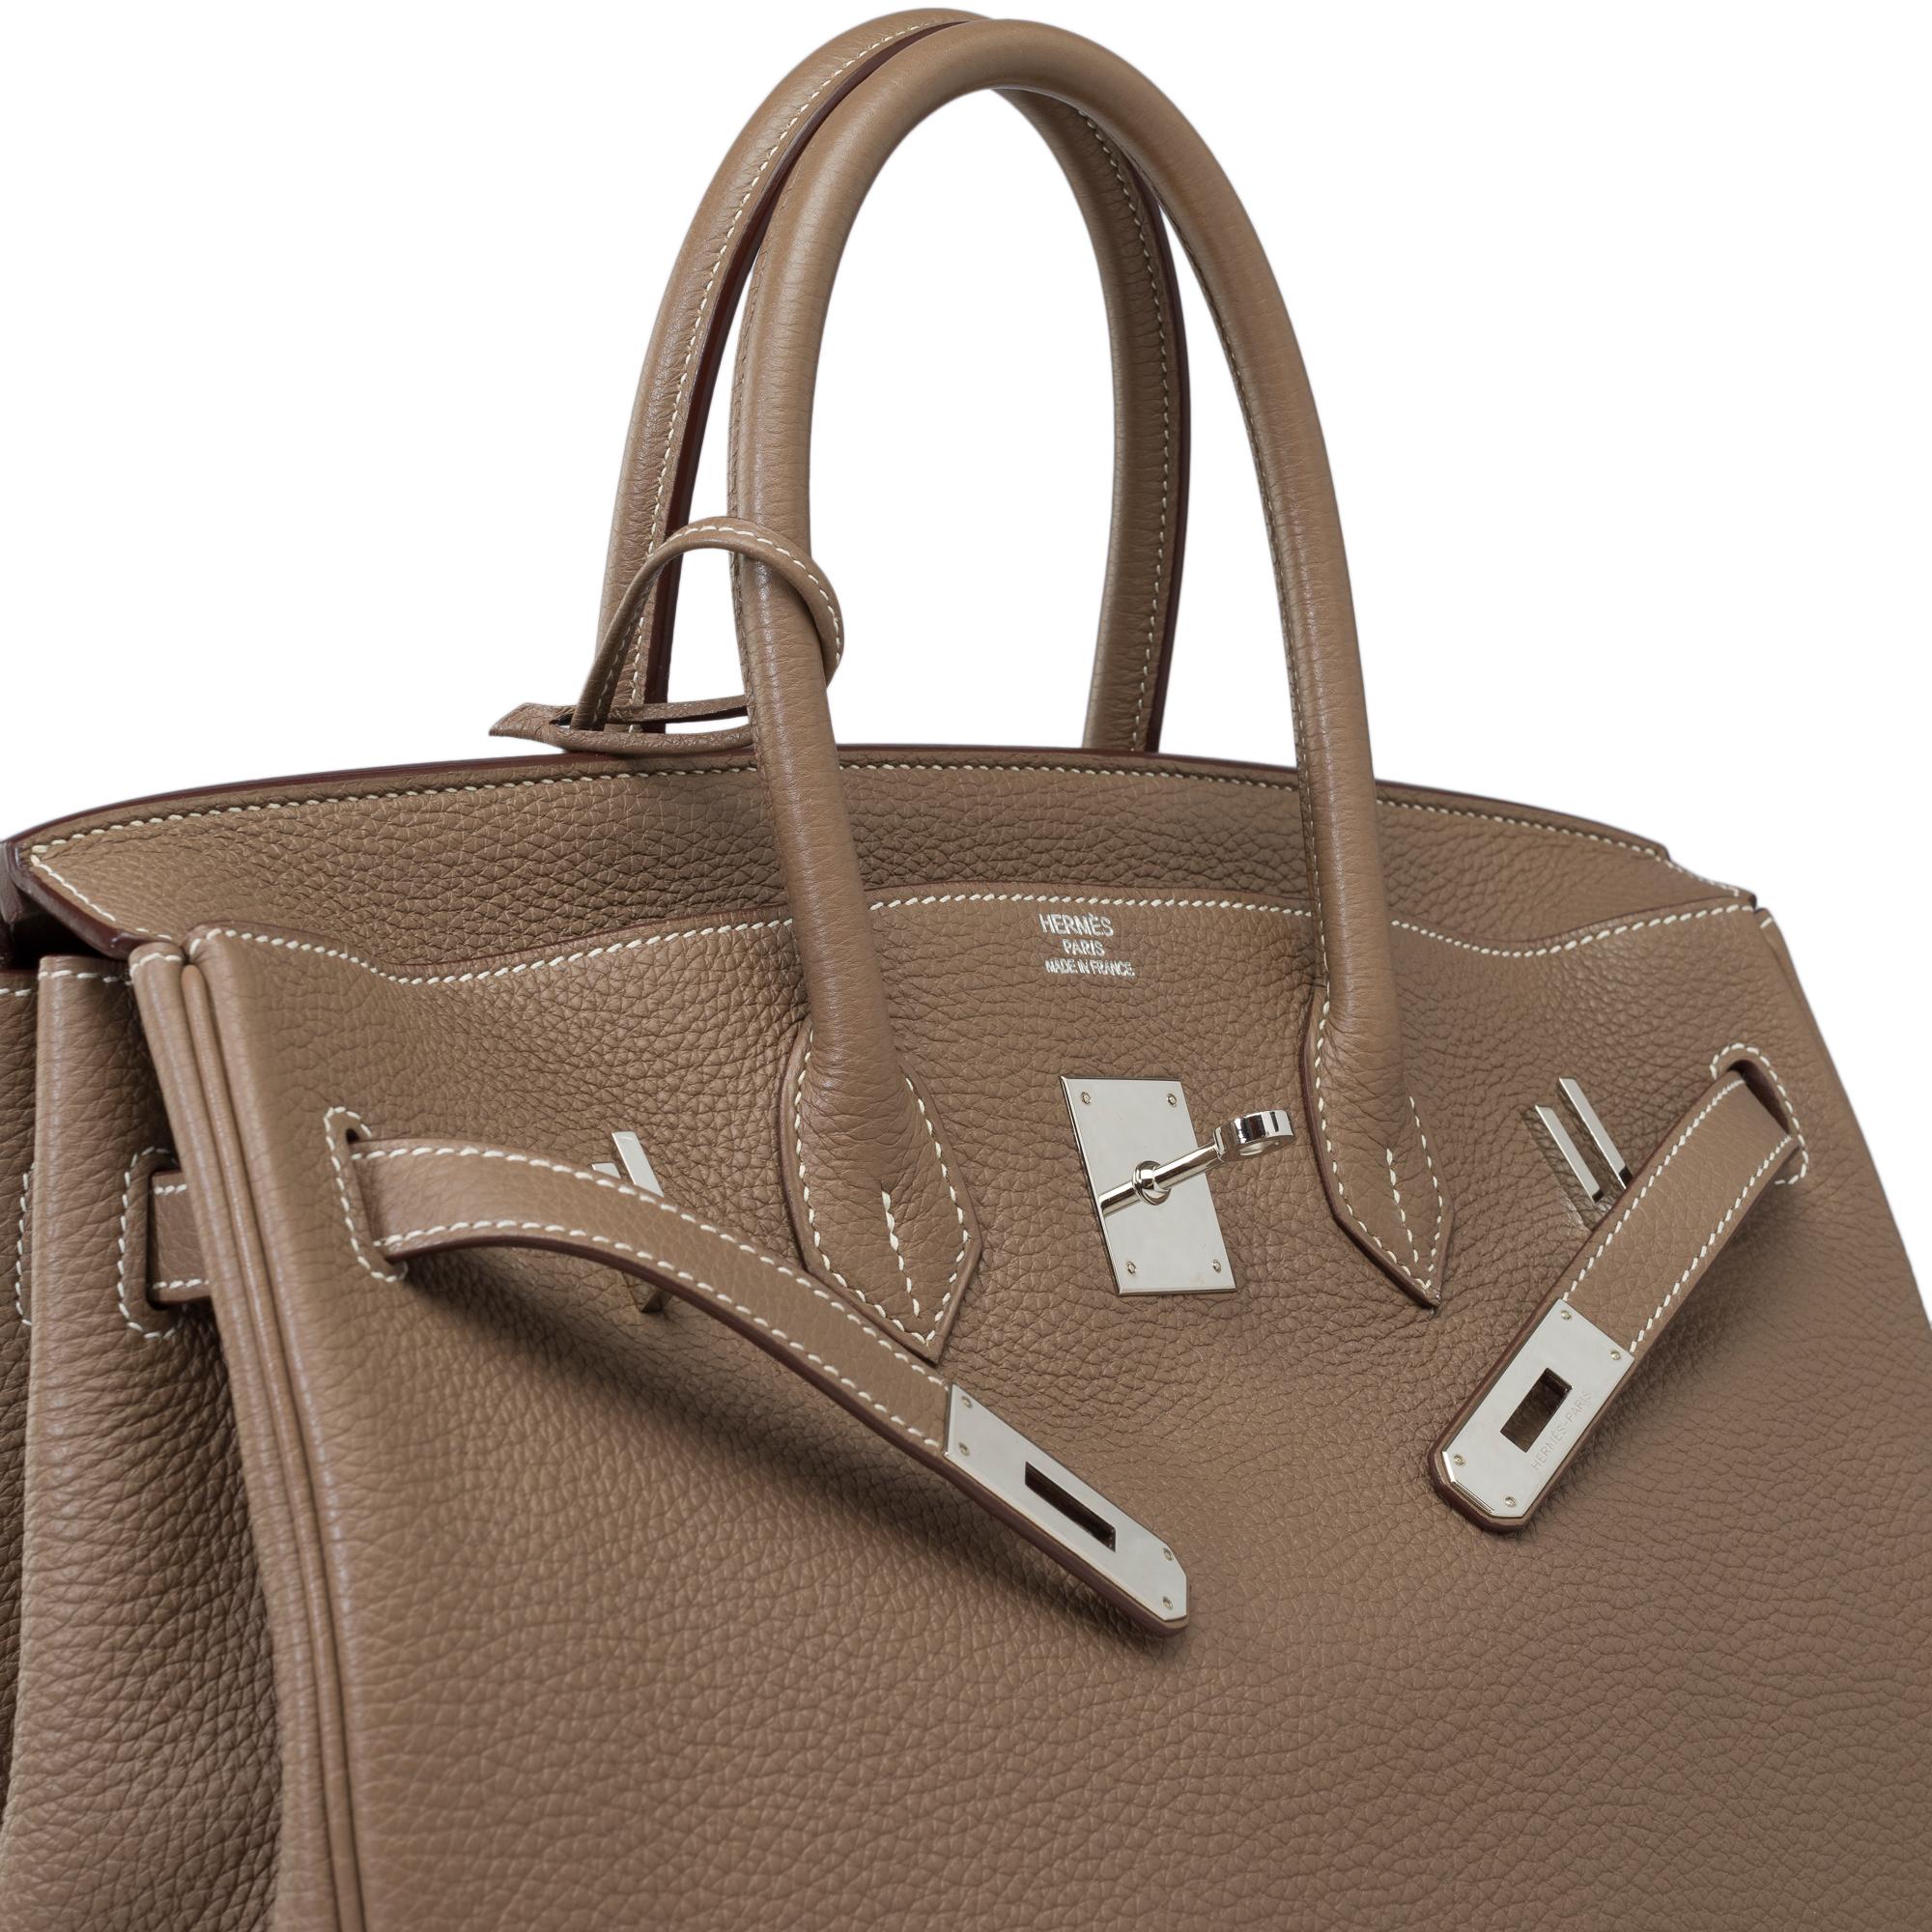 Stunning Hermès Birkin 35 handbag in etoupe Togo leather, SHW 4